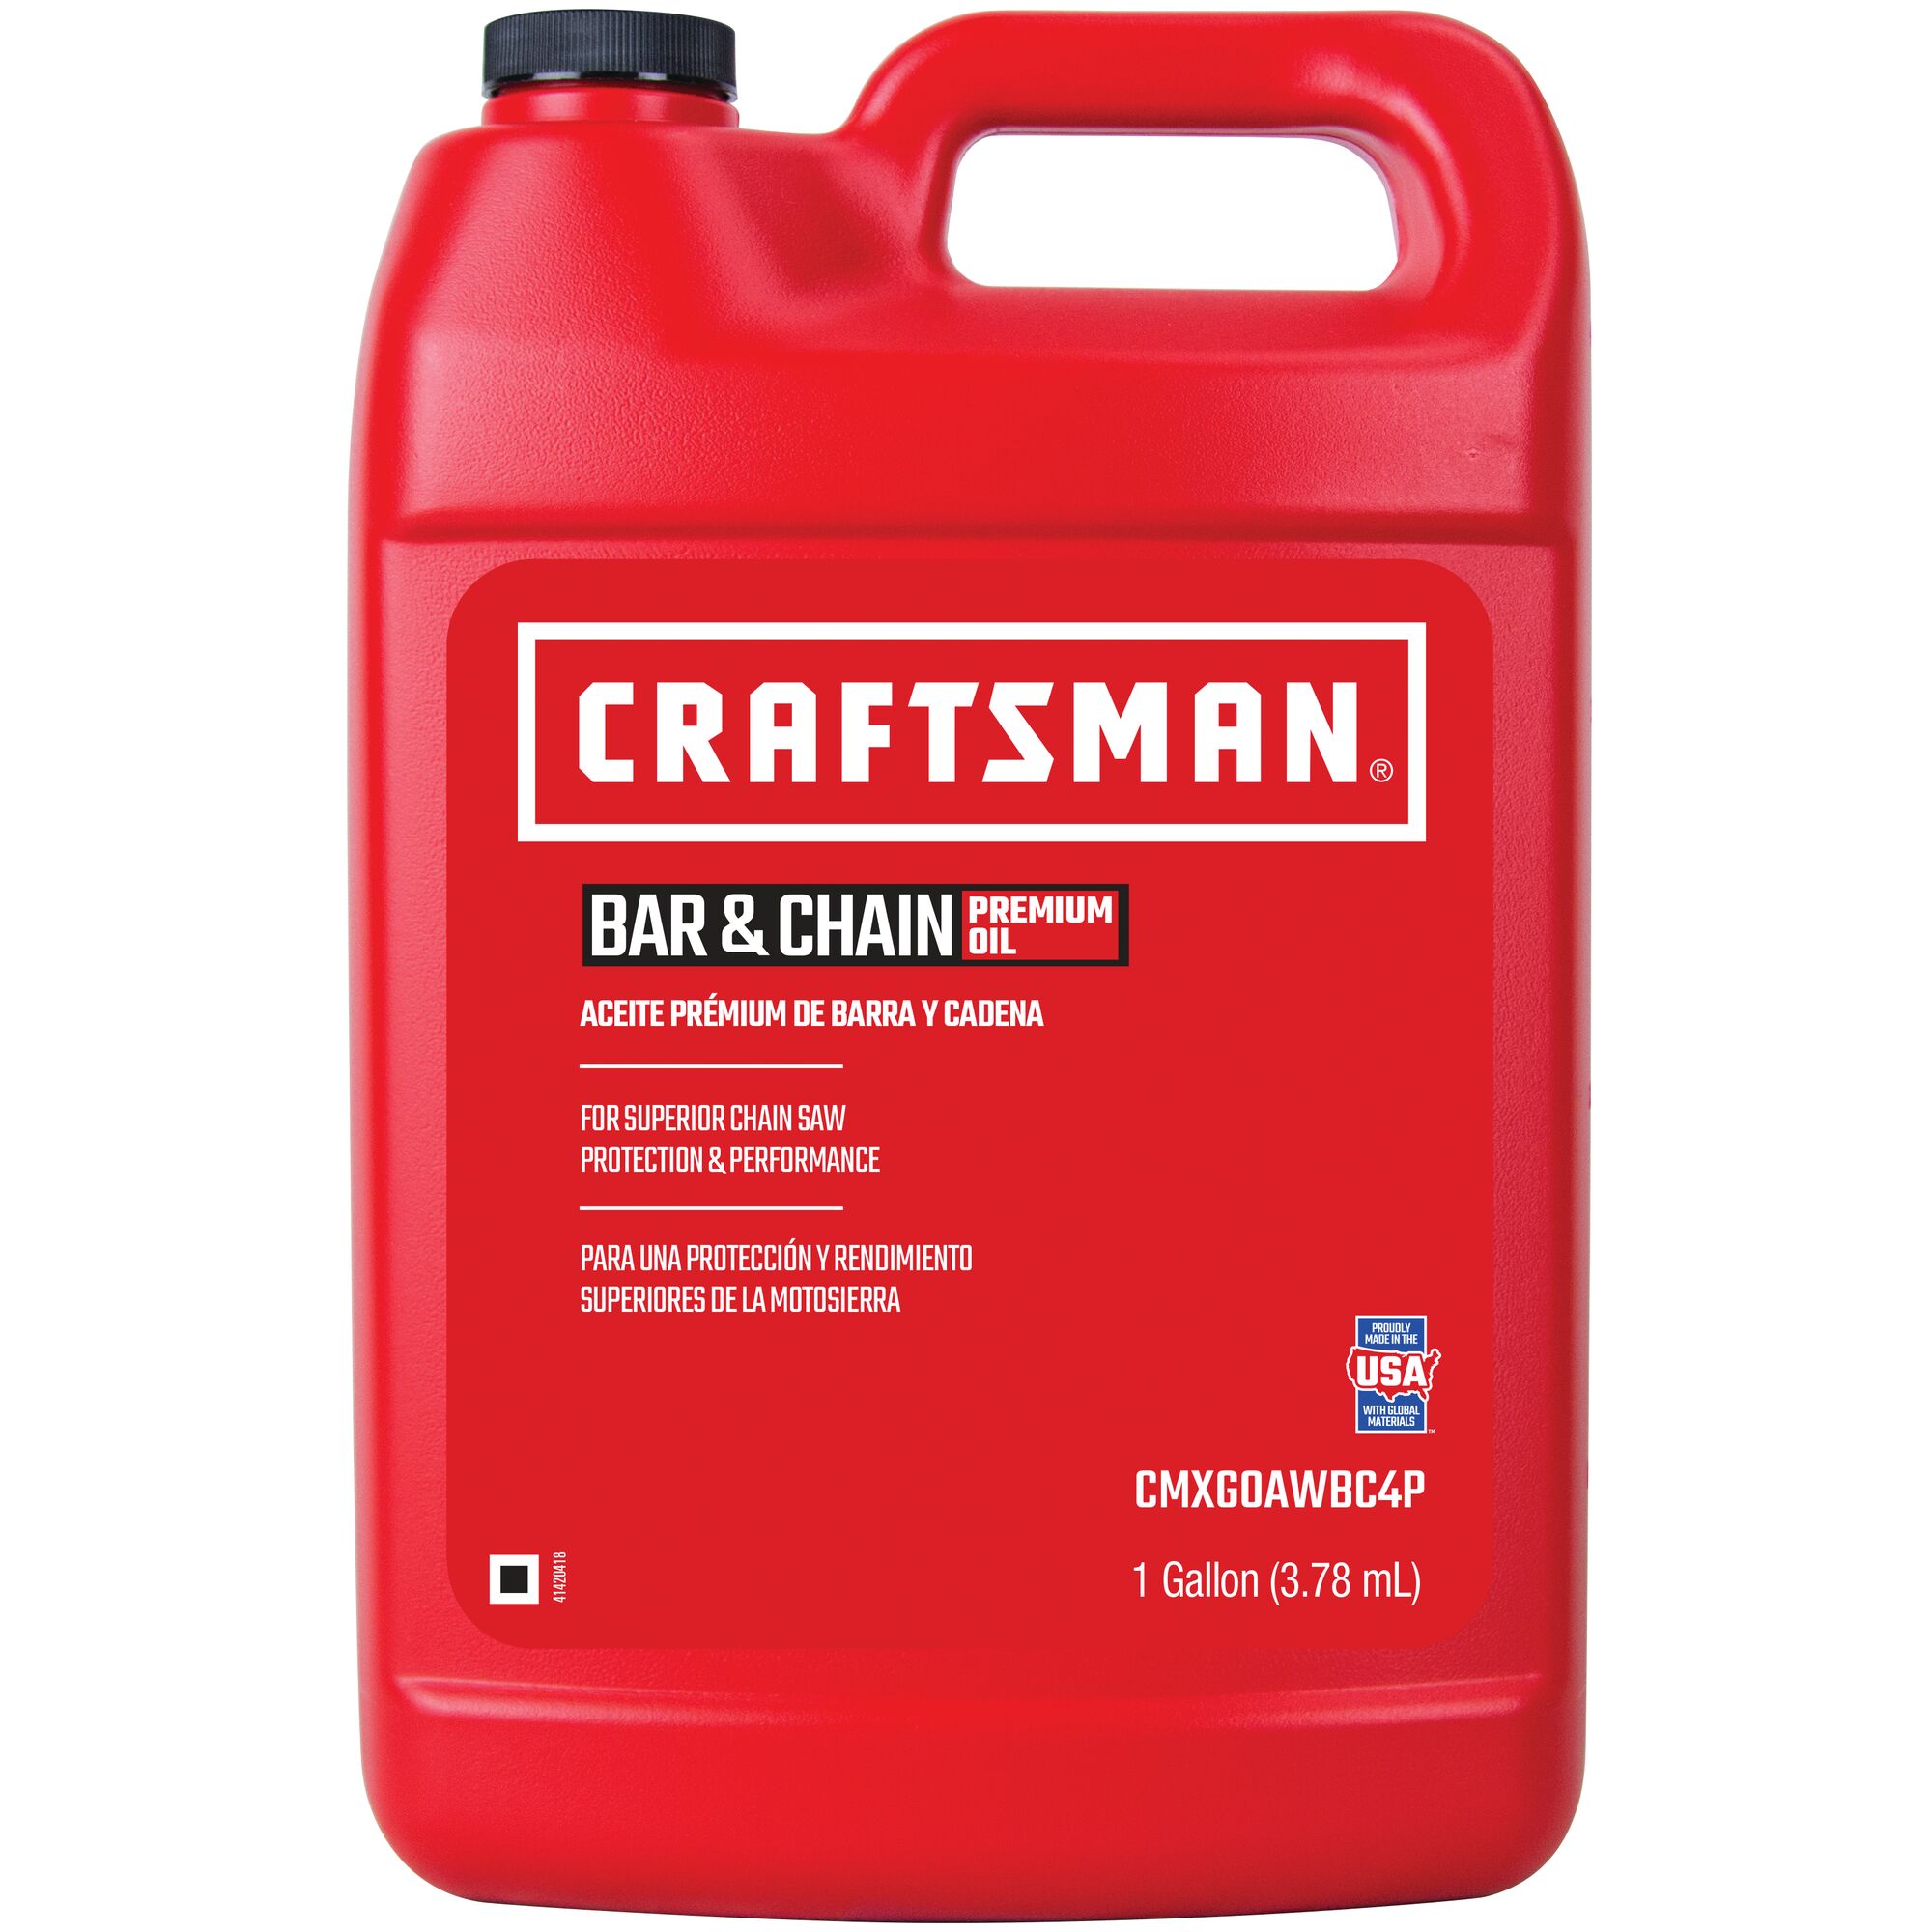 Craftsman bar and chain premium oil.